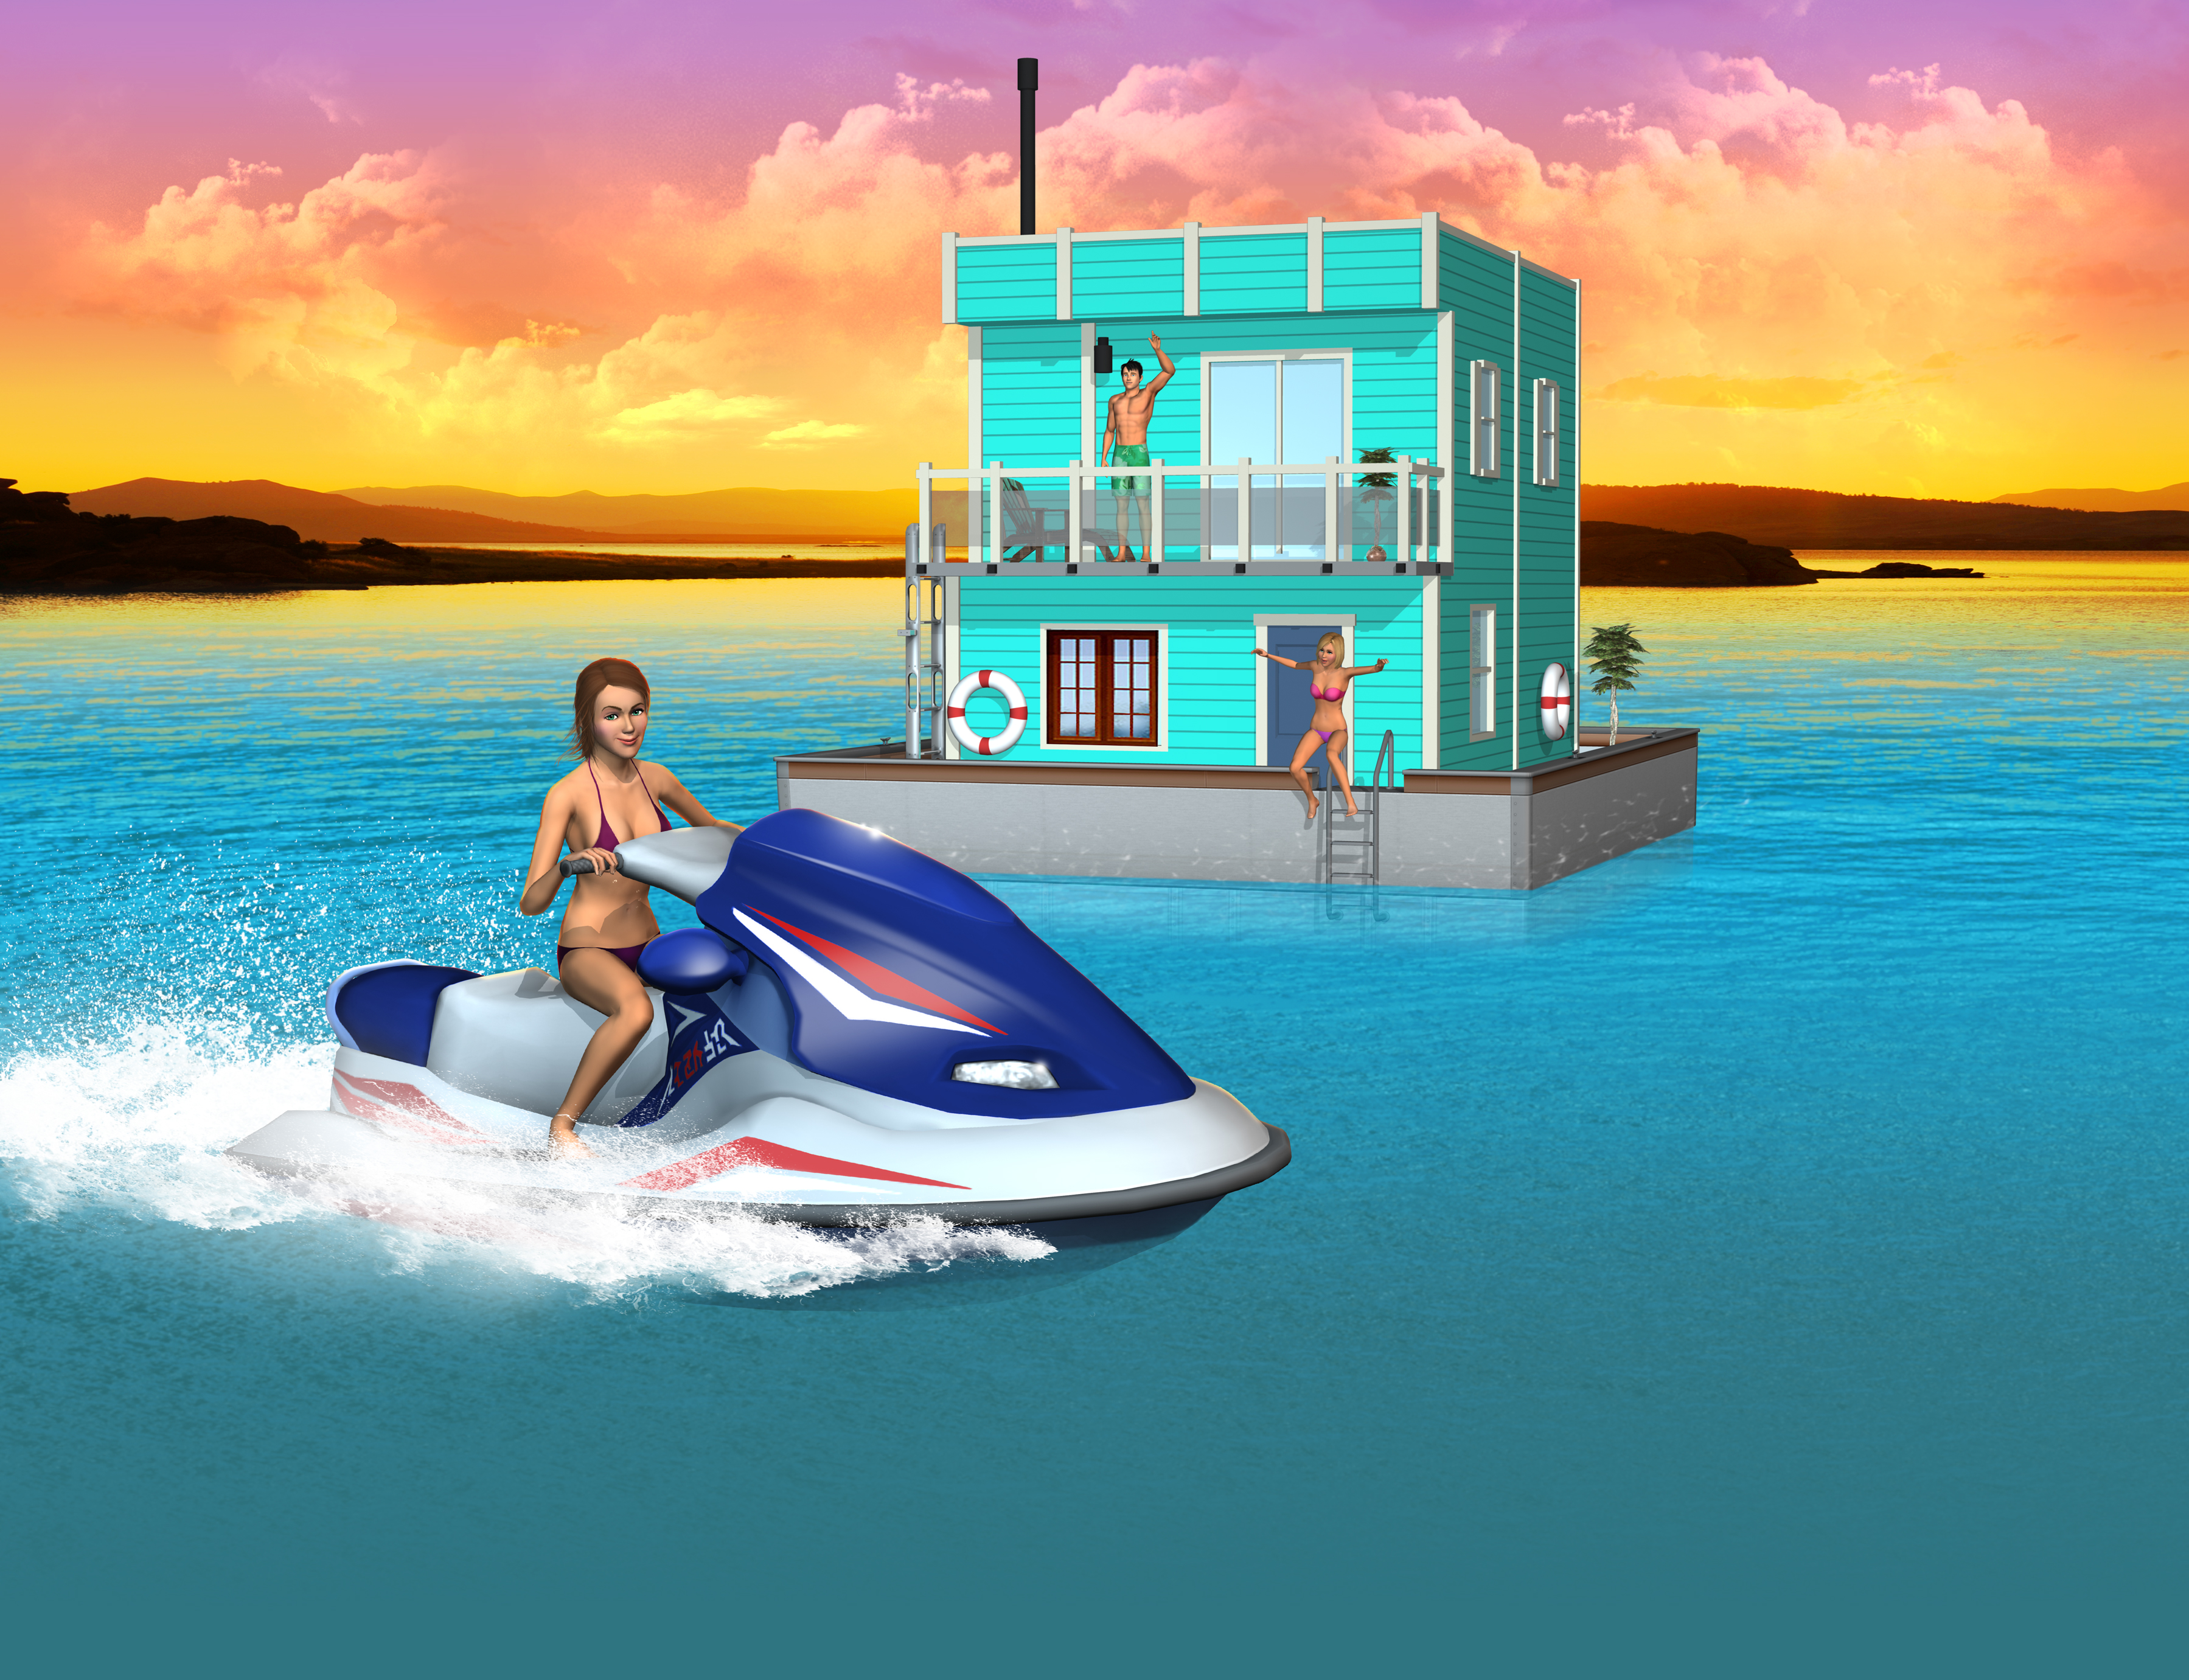 the sims 3 island paradise key generator